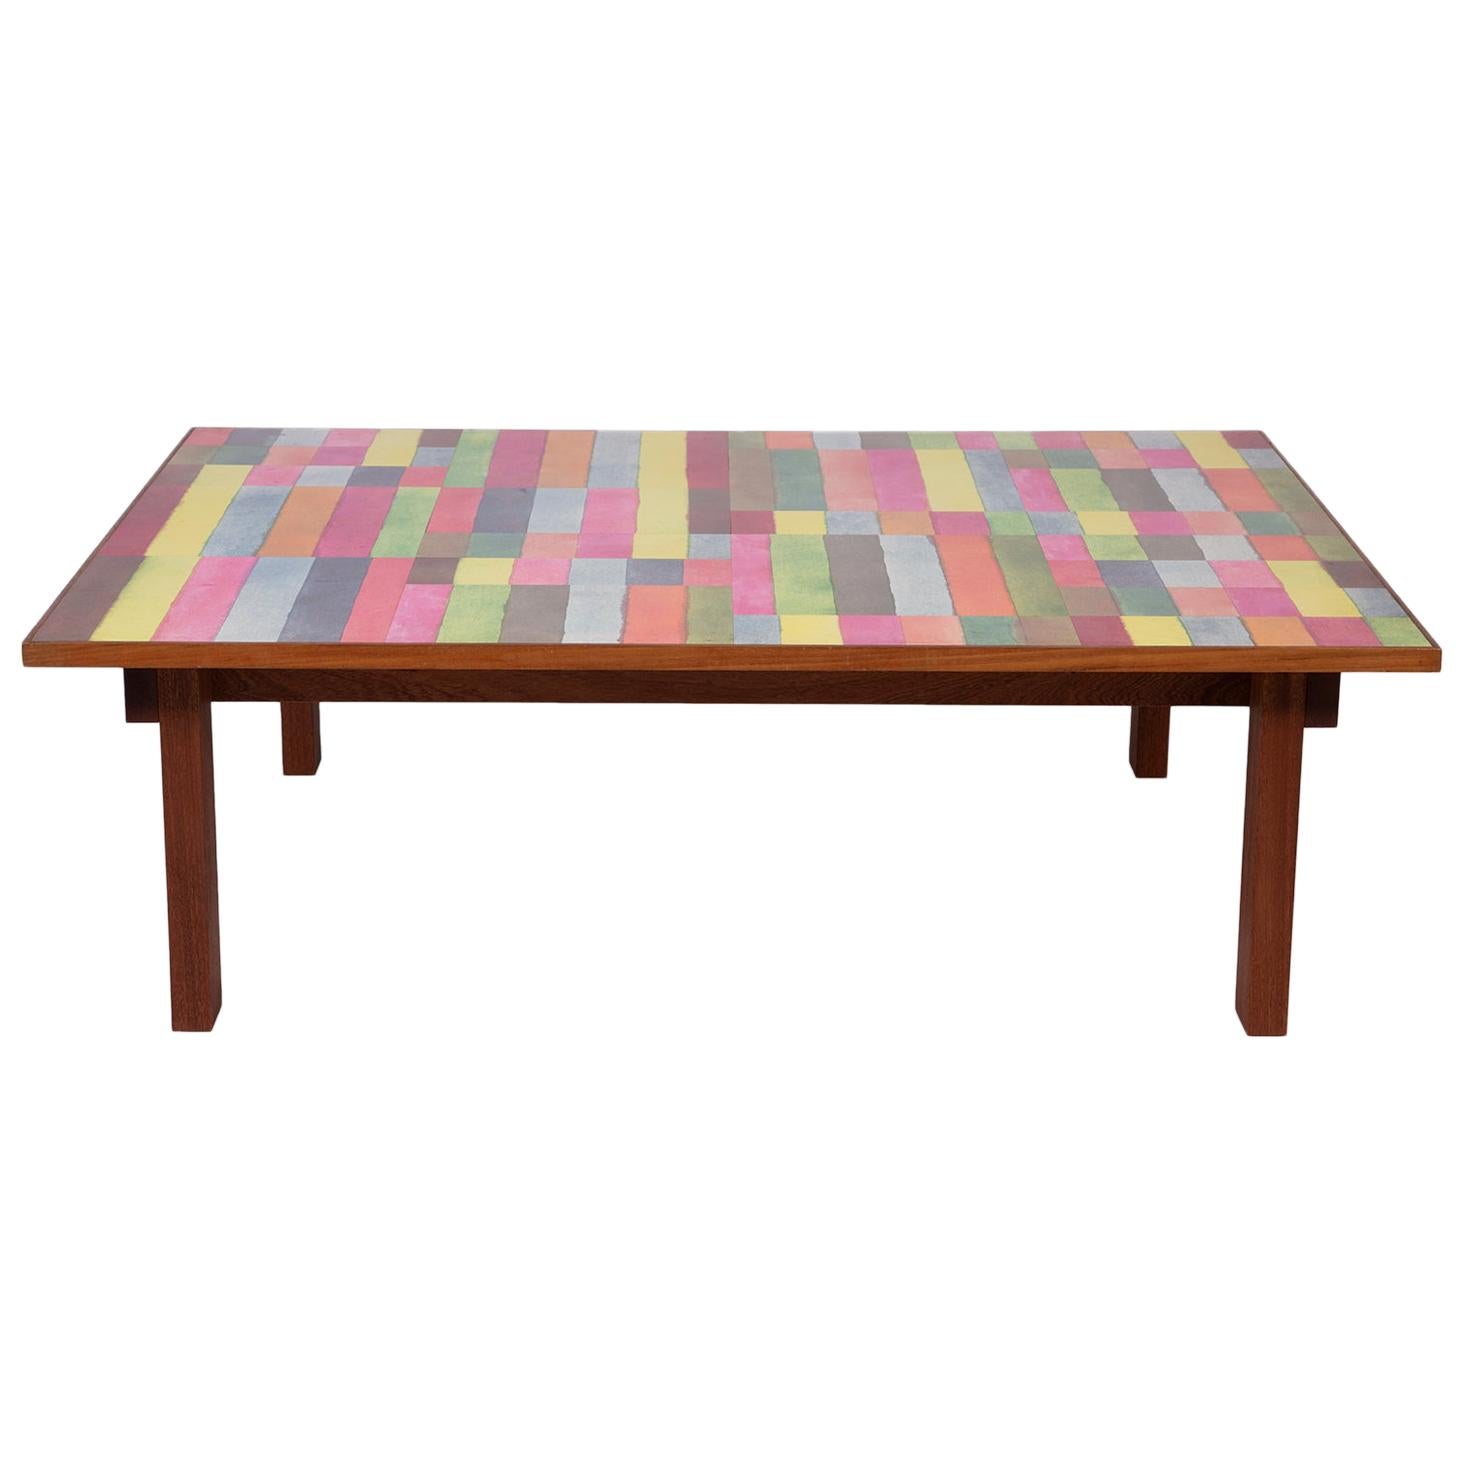 Multicolour Rectangles Table by DANAD Design 'Barry Daniels' For Sale